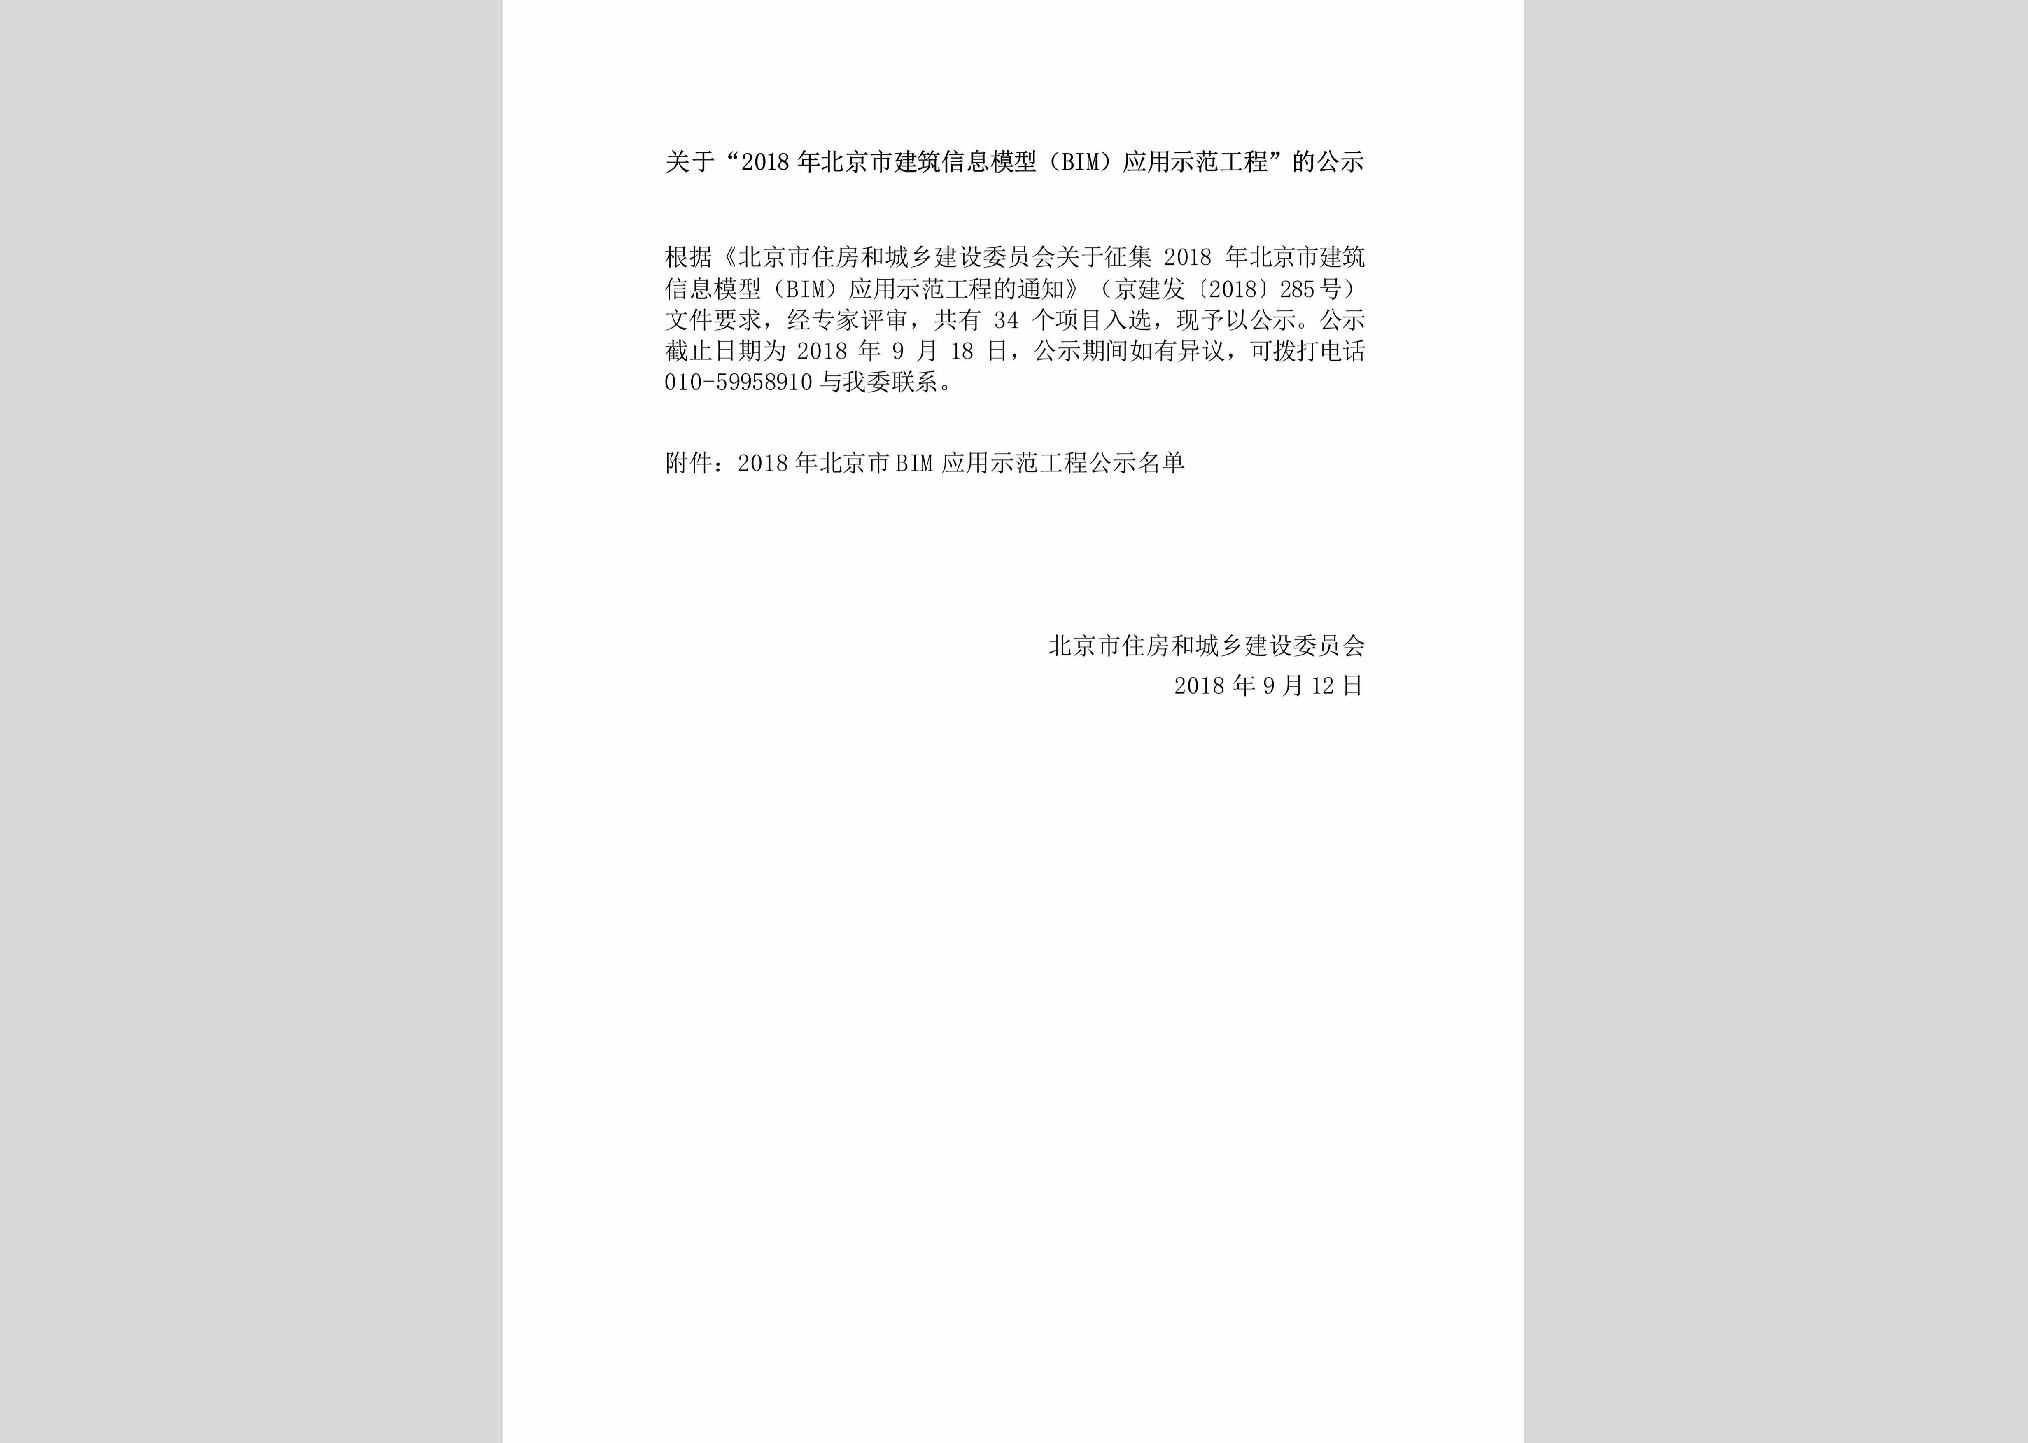 BJ-JZXXSFGC-2018：关于“2018年北京市建筑信息模型（BIM）应用示范工程”的公示